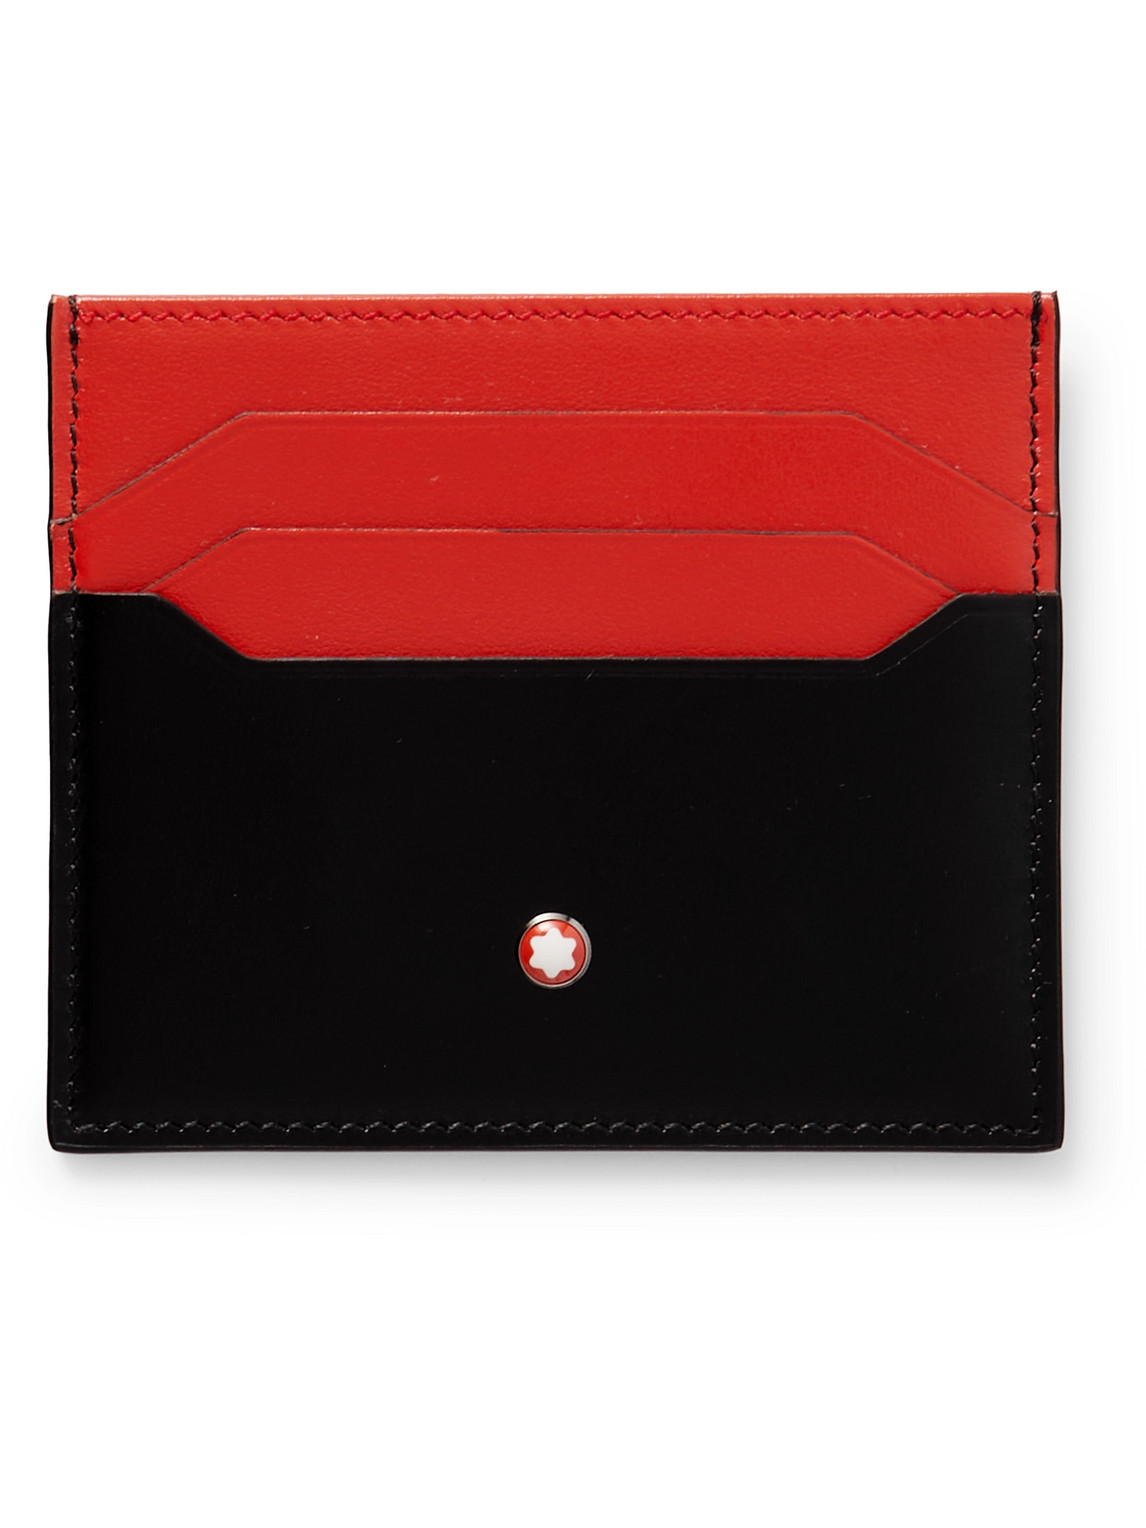 Montblanc Meisterstück Leather Cardholder In Red